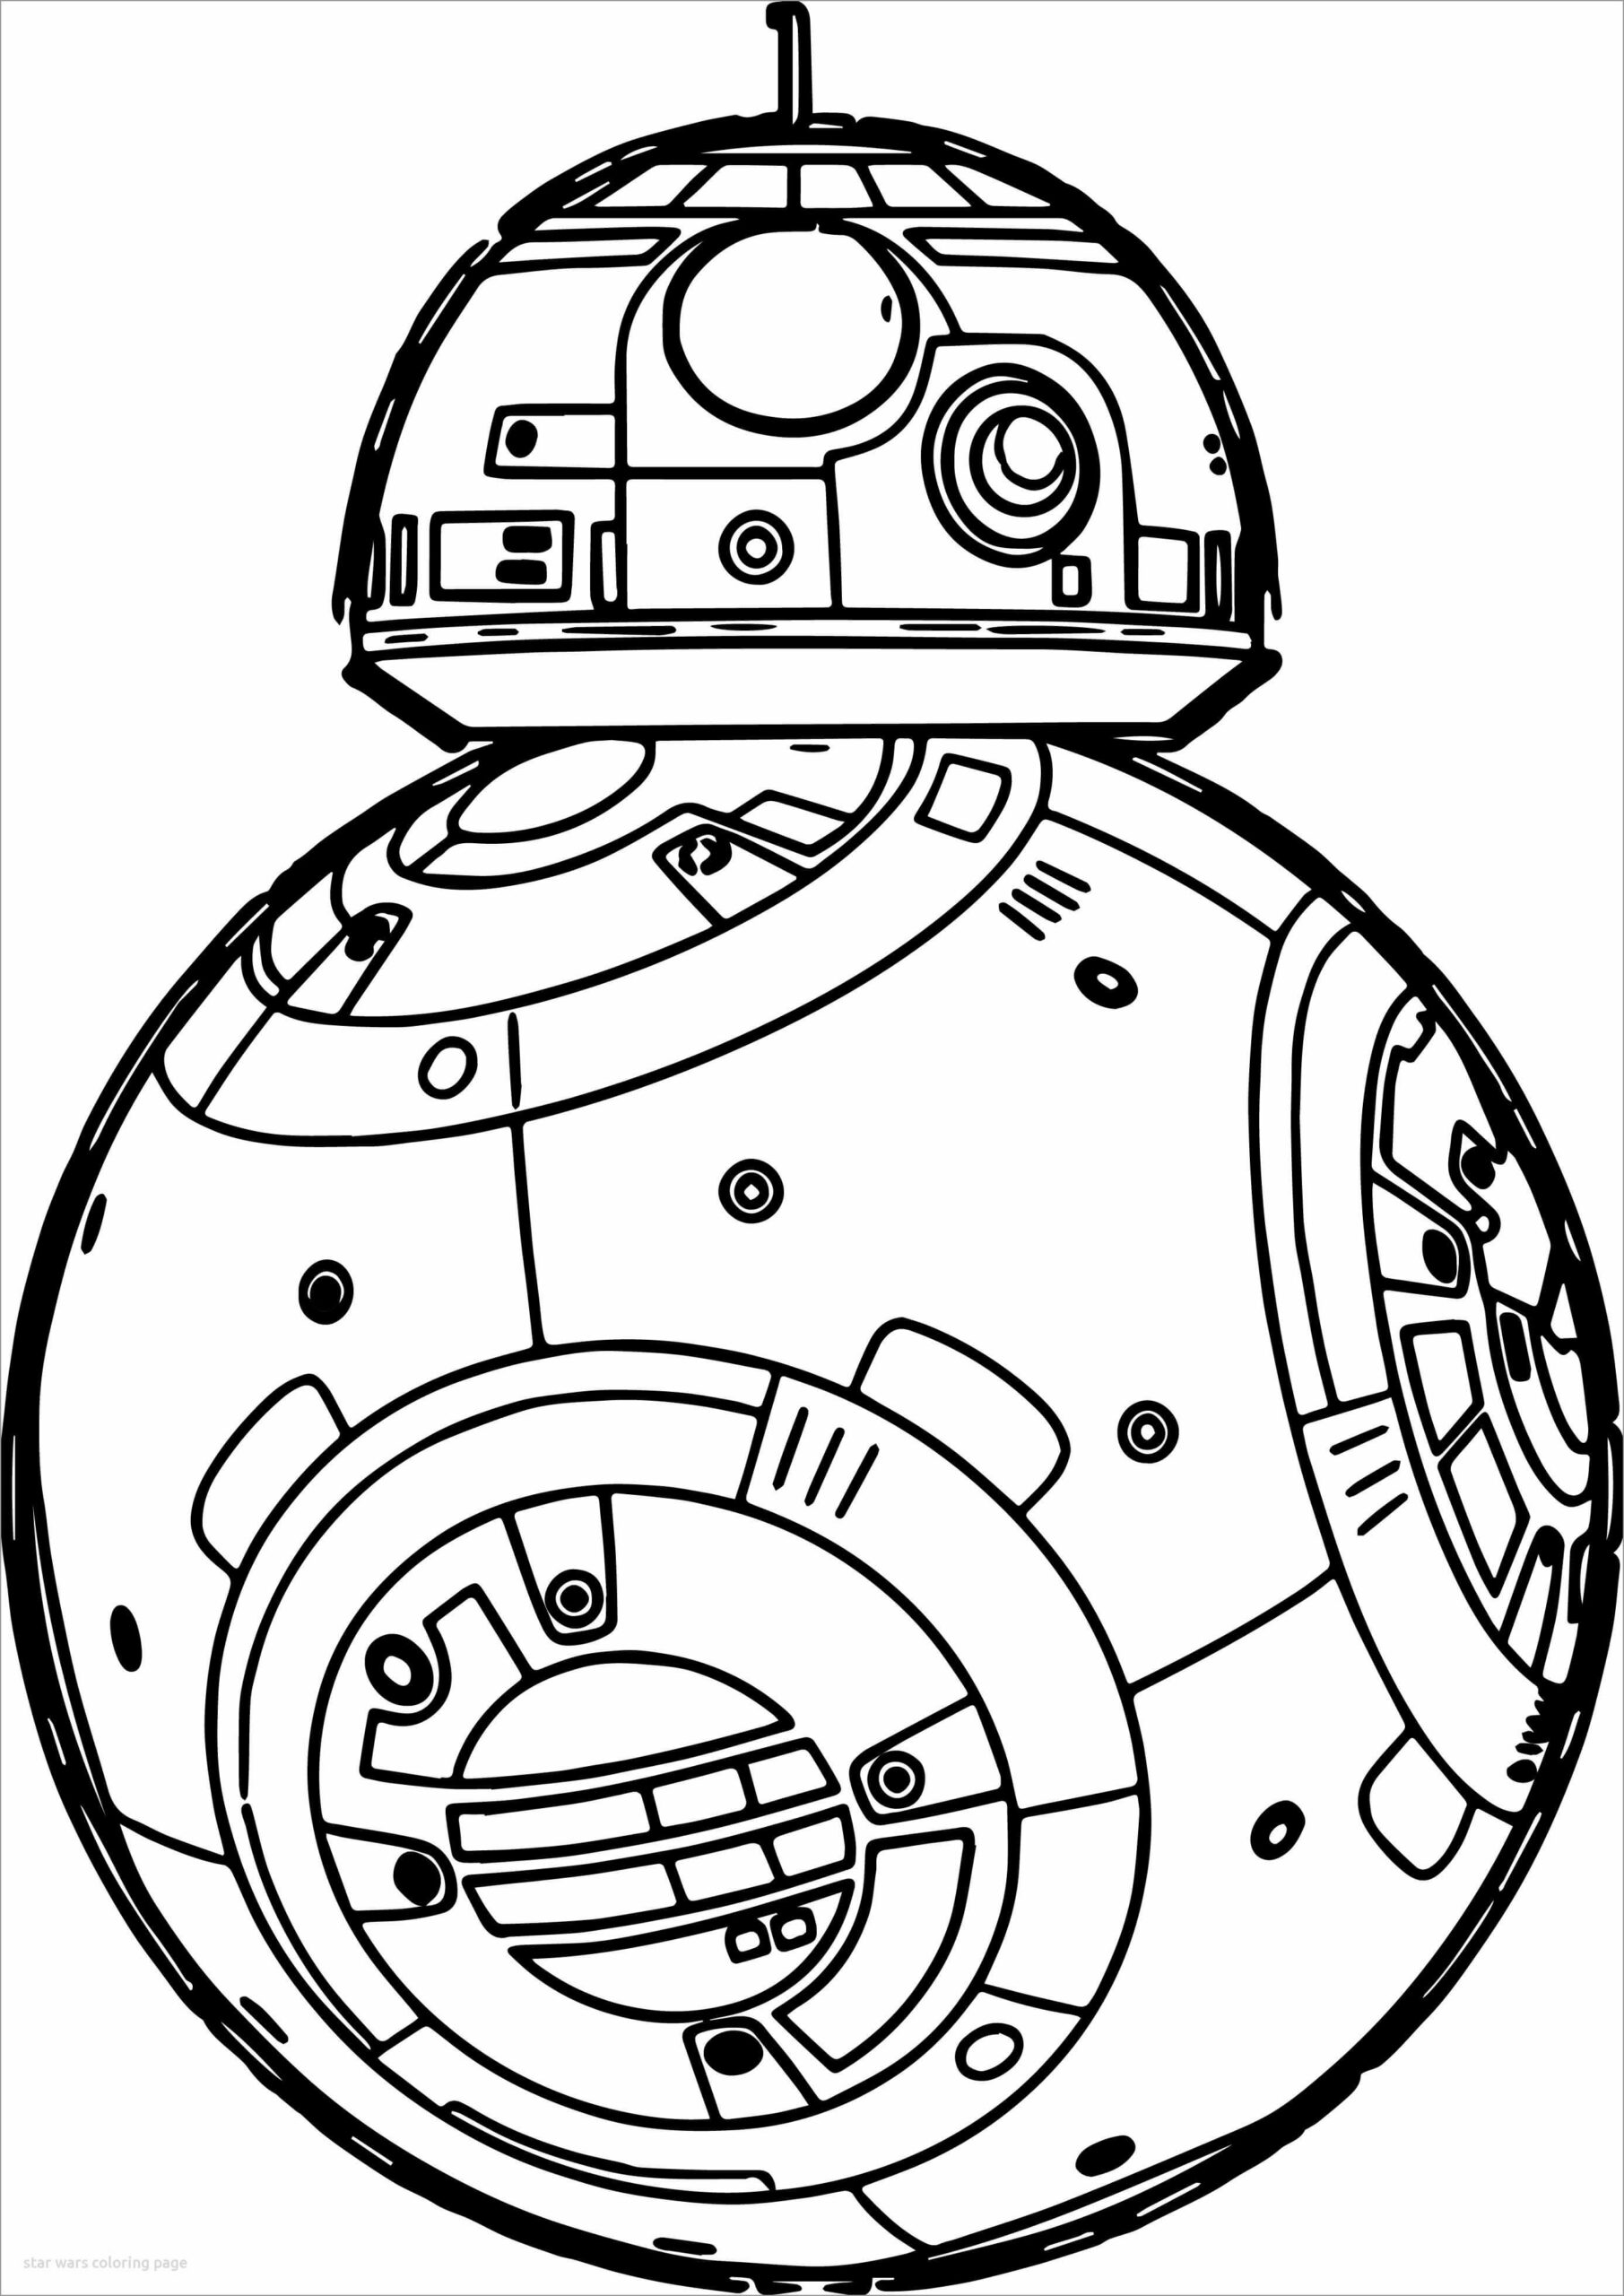 BB-8 in Star Wars